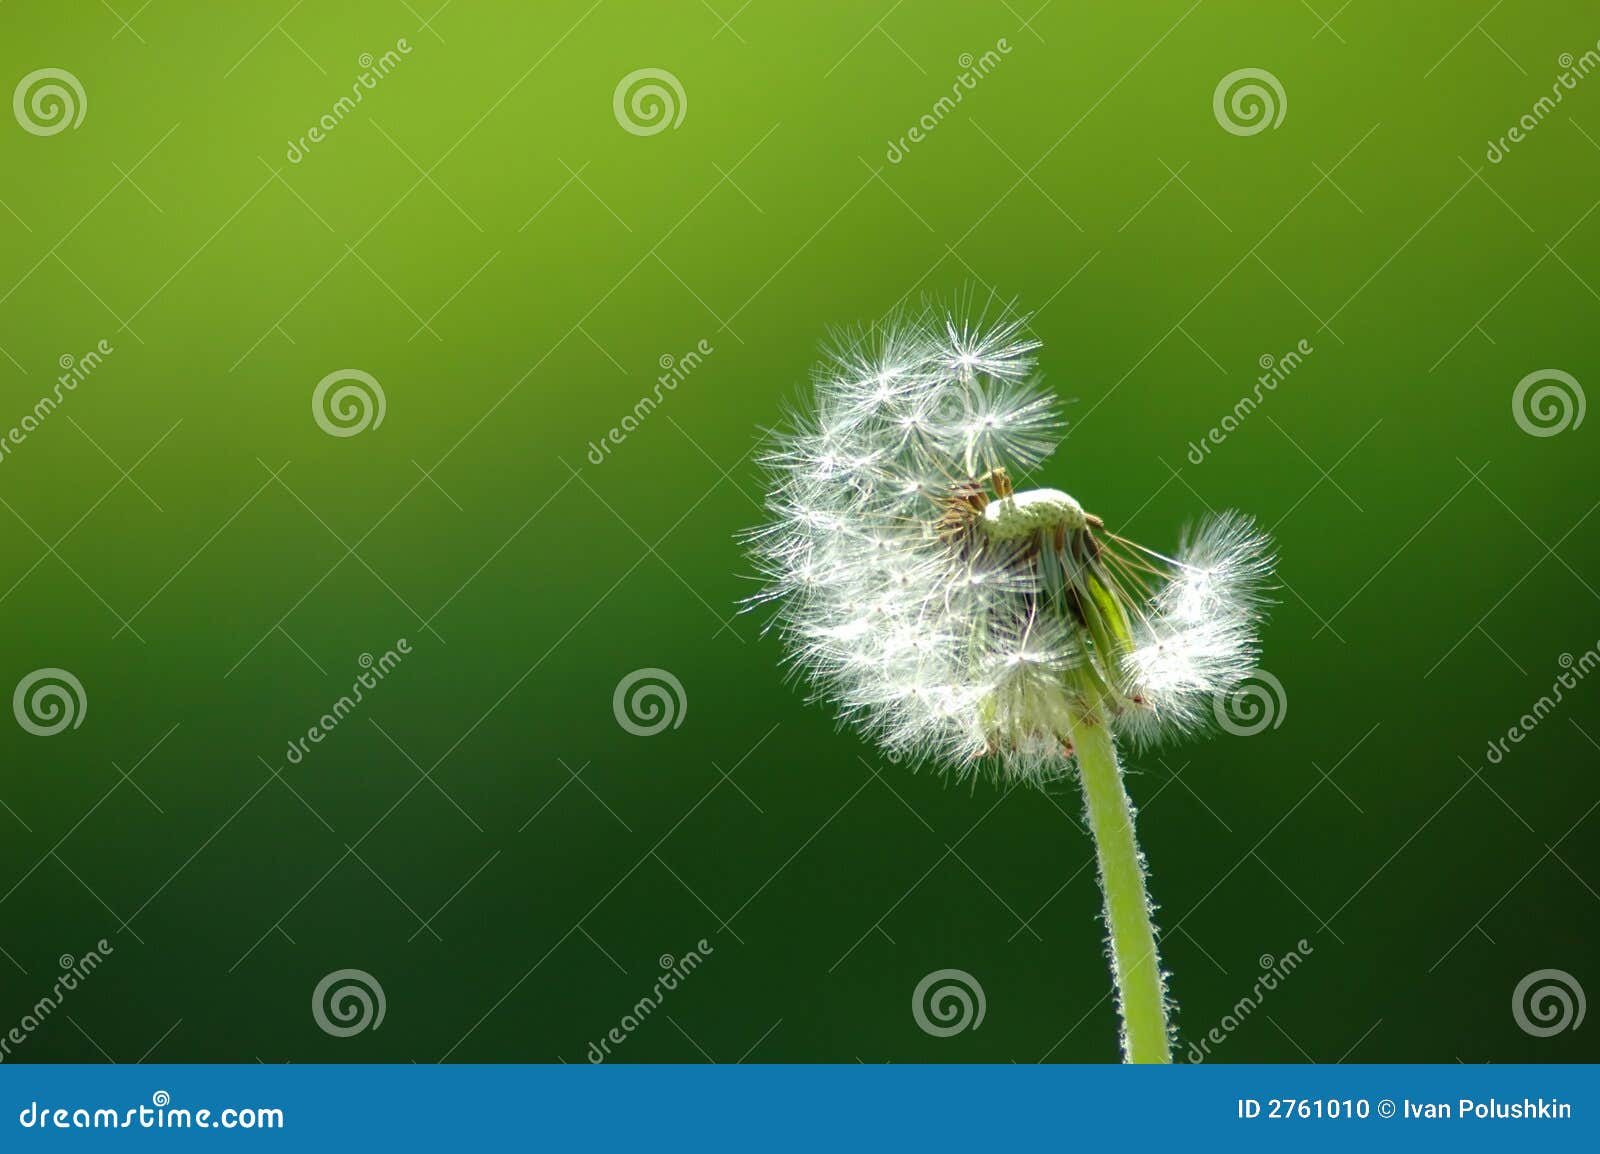 solitary dandelion